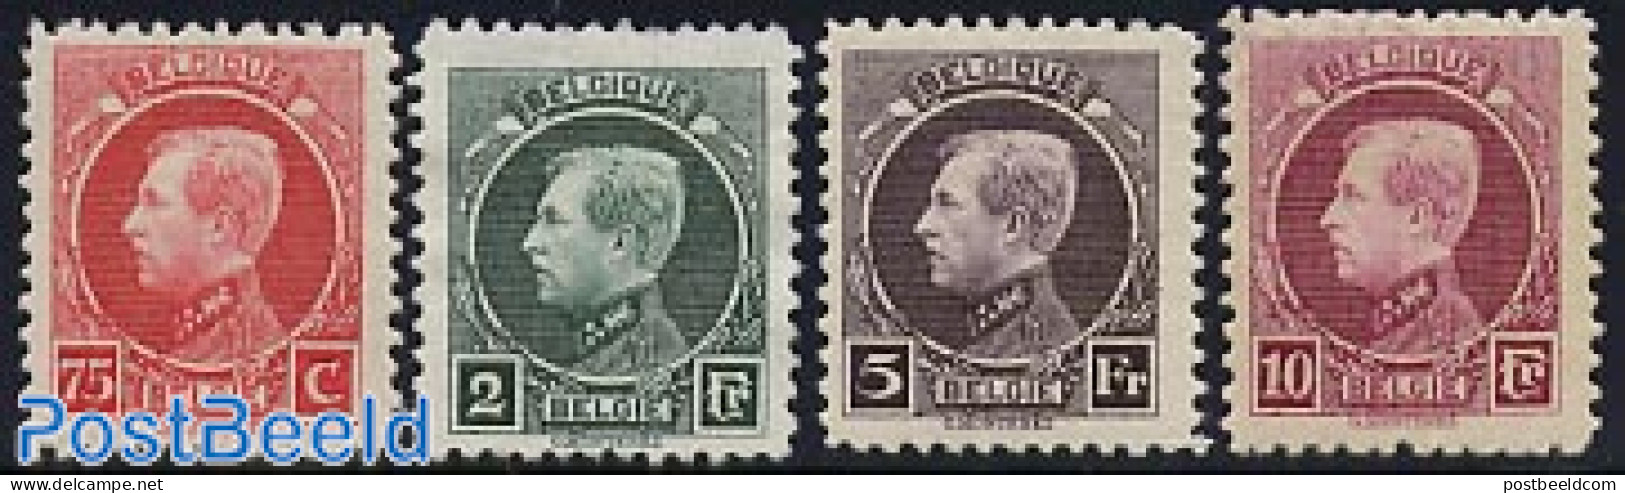 Belgium 1922 Definitives 4v, King Albert I, Mint NH - Ungebraucht